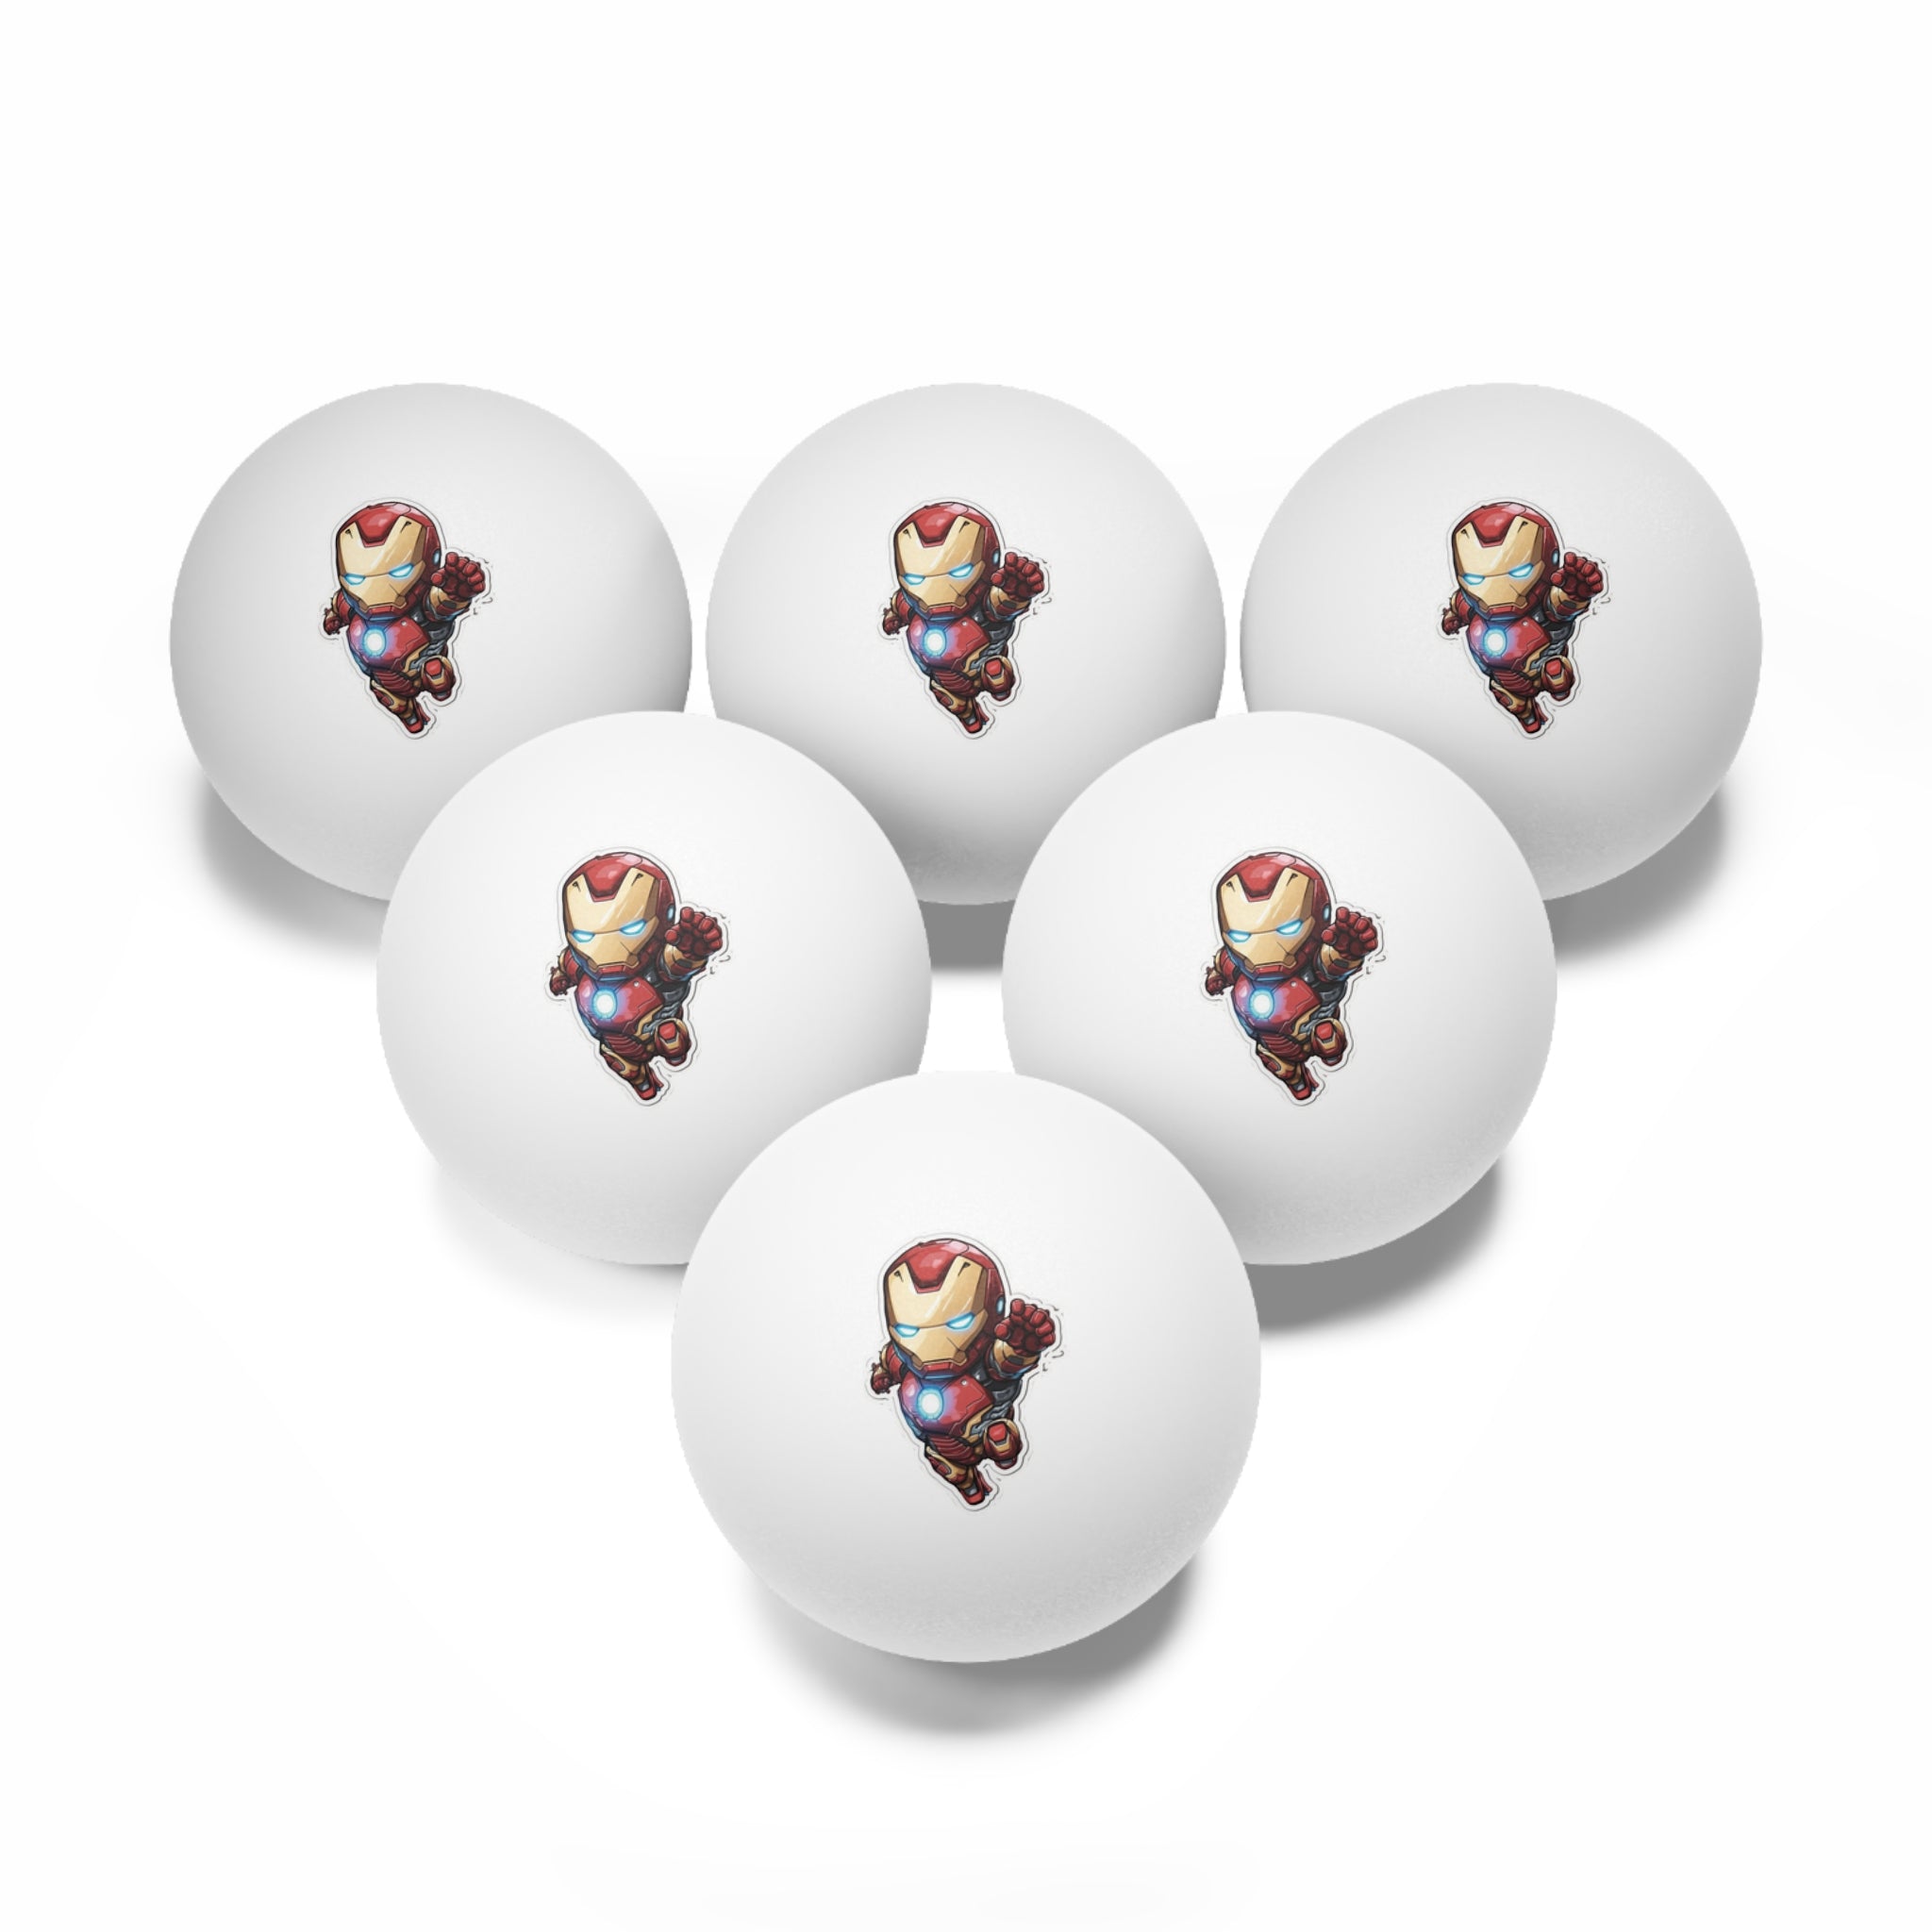 Ping Pong Balls, 6 pcs - Pop Art - Baby Iron-Man